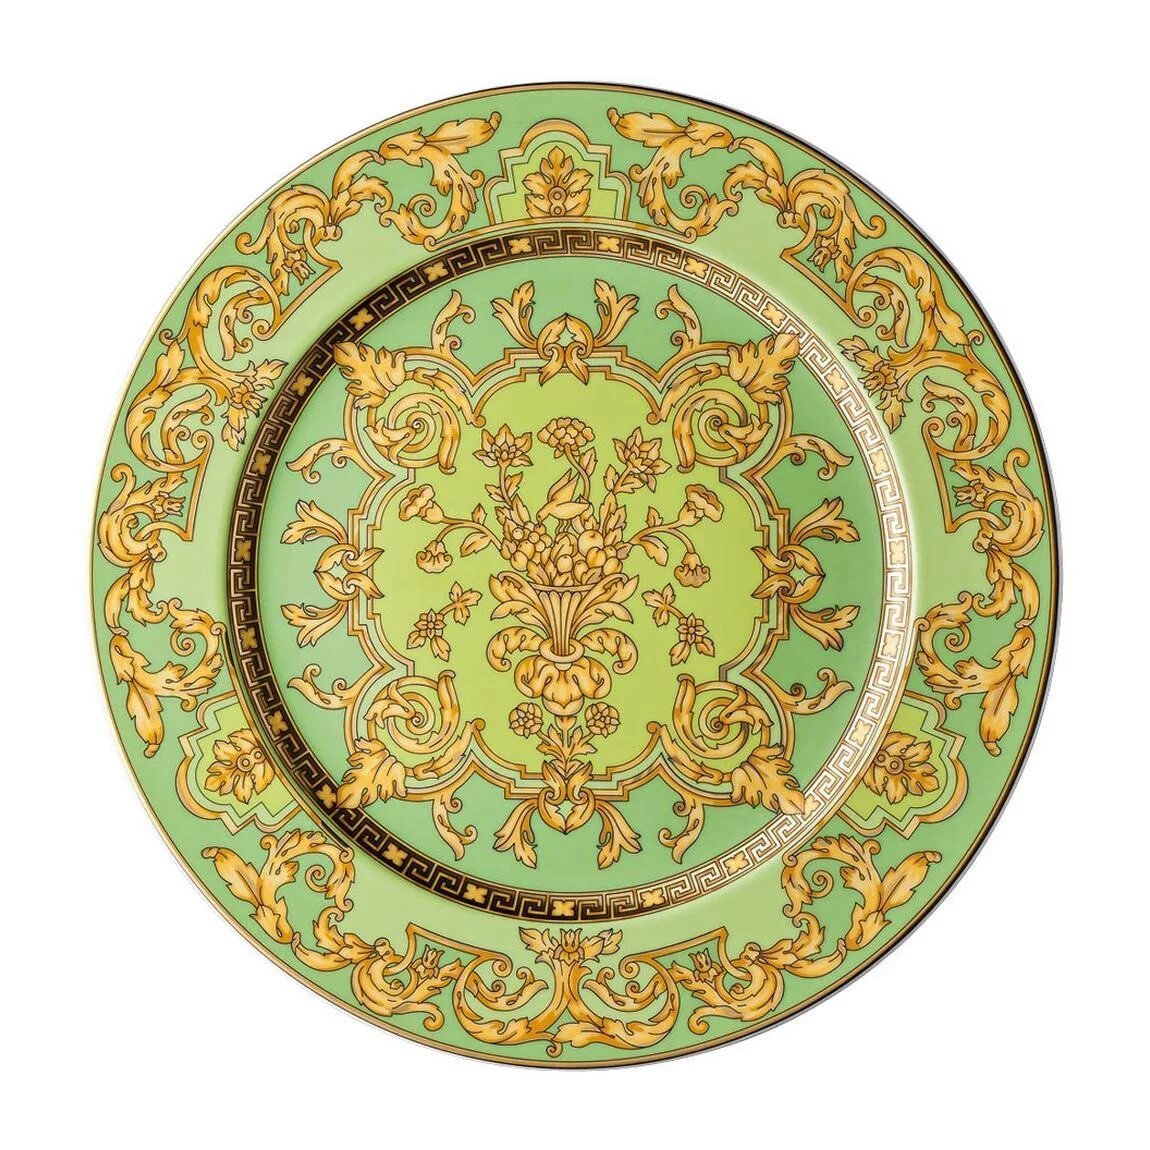 Тарелка з. Rosenthal фарфор тарелка Версаче. Розенталь Версаче настенная тарелка. Золотая тарелка Версаче. Посуда Версаче зеленая.